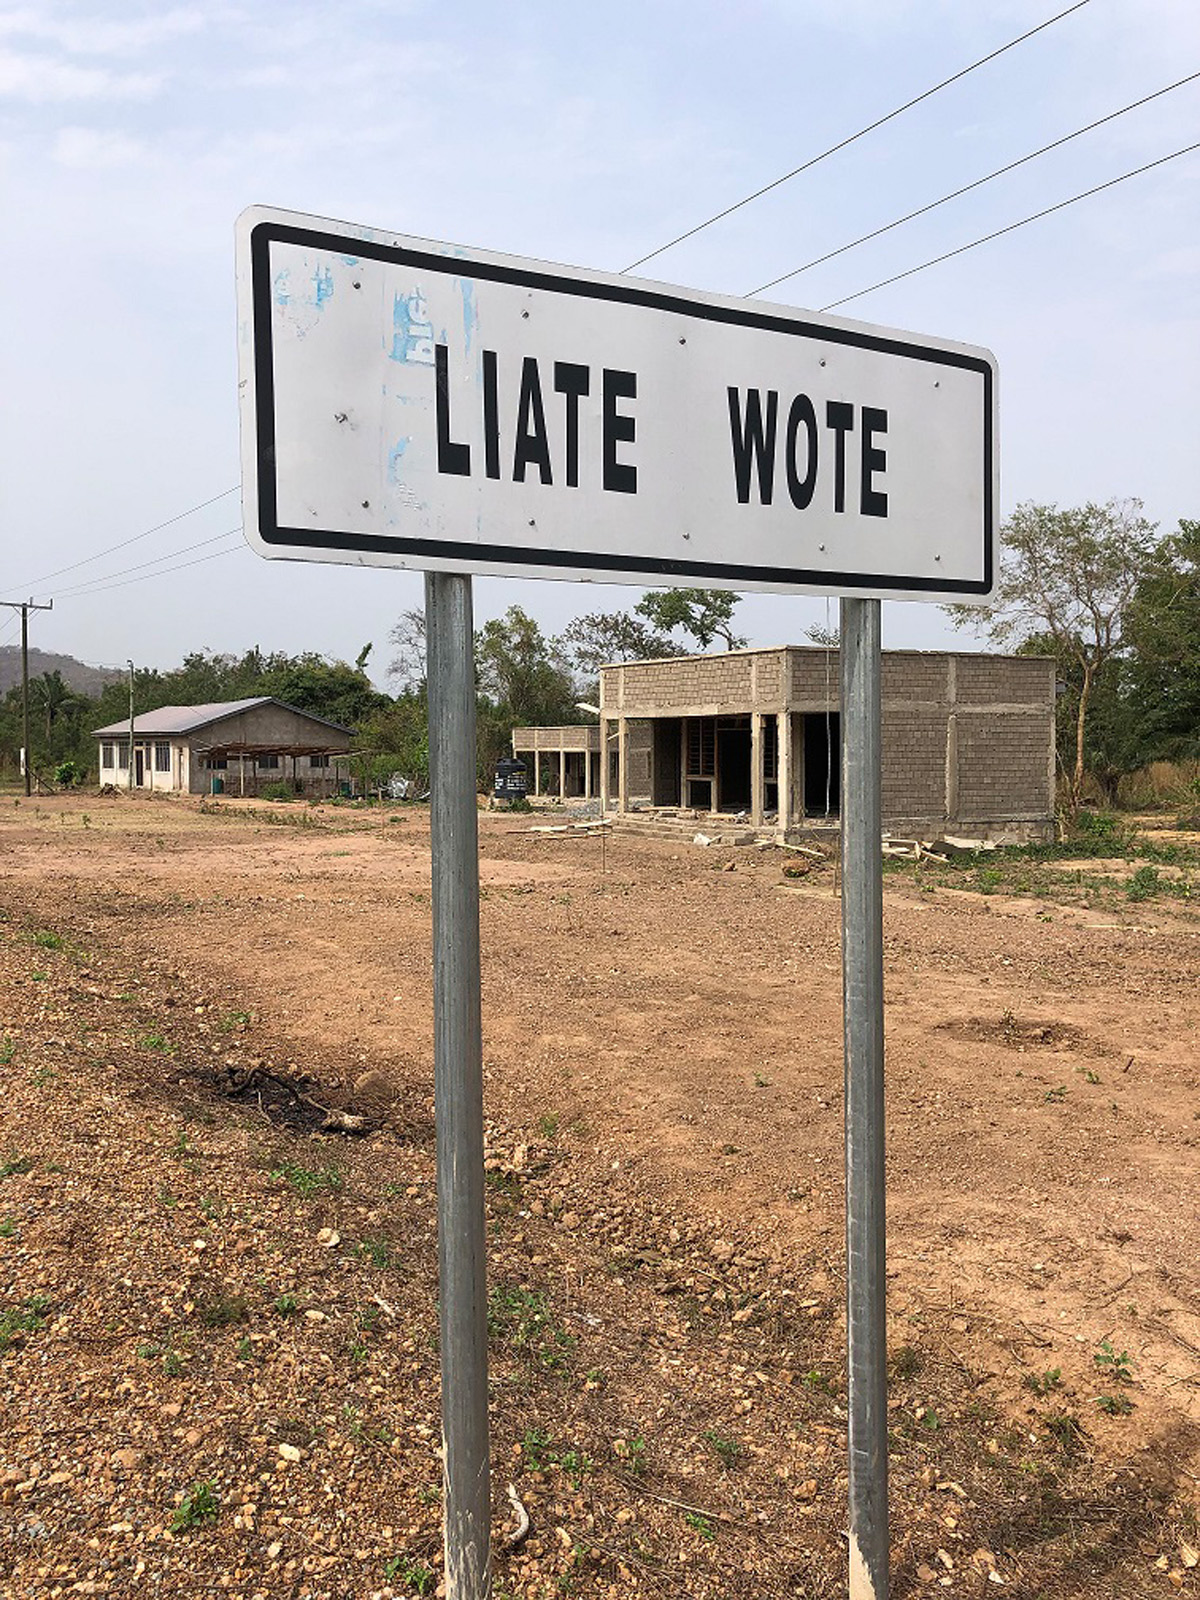 De Green Hub in Liate Wote, Ghana